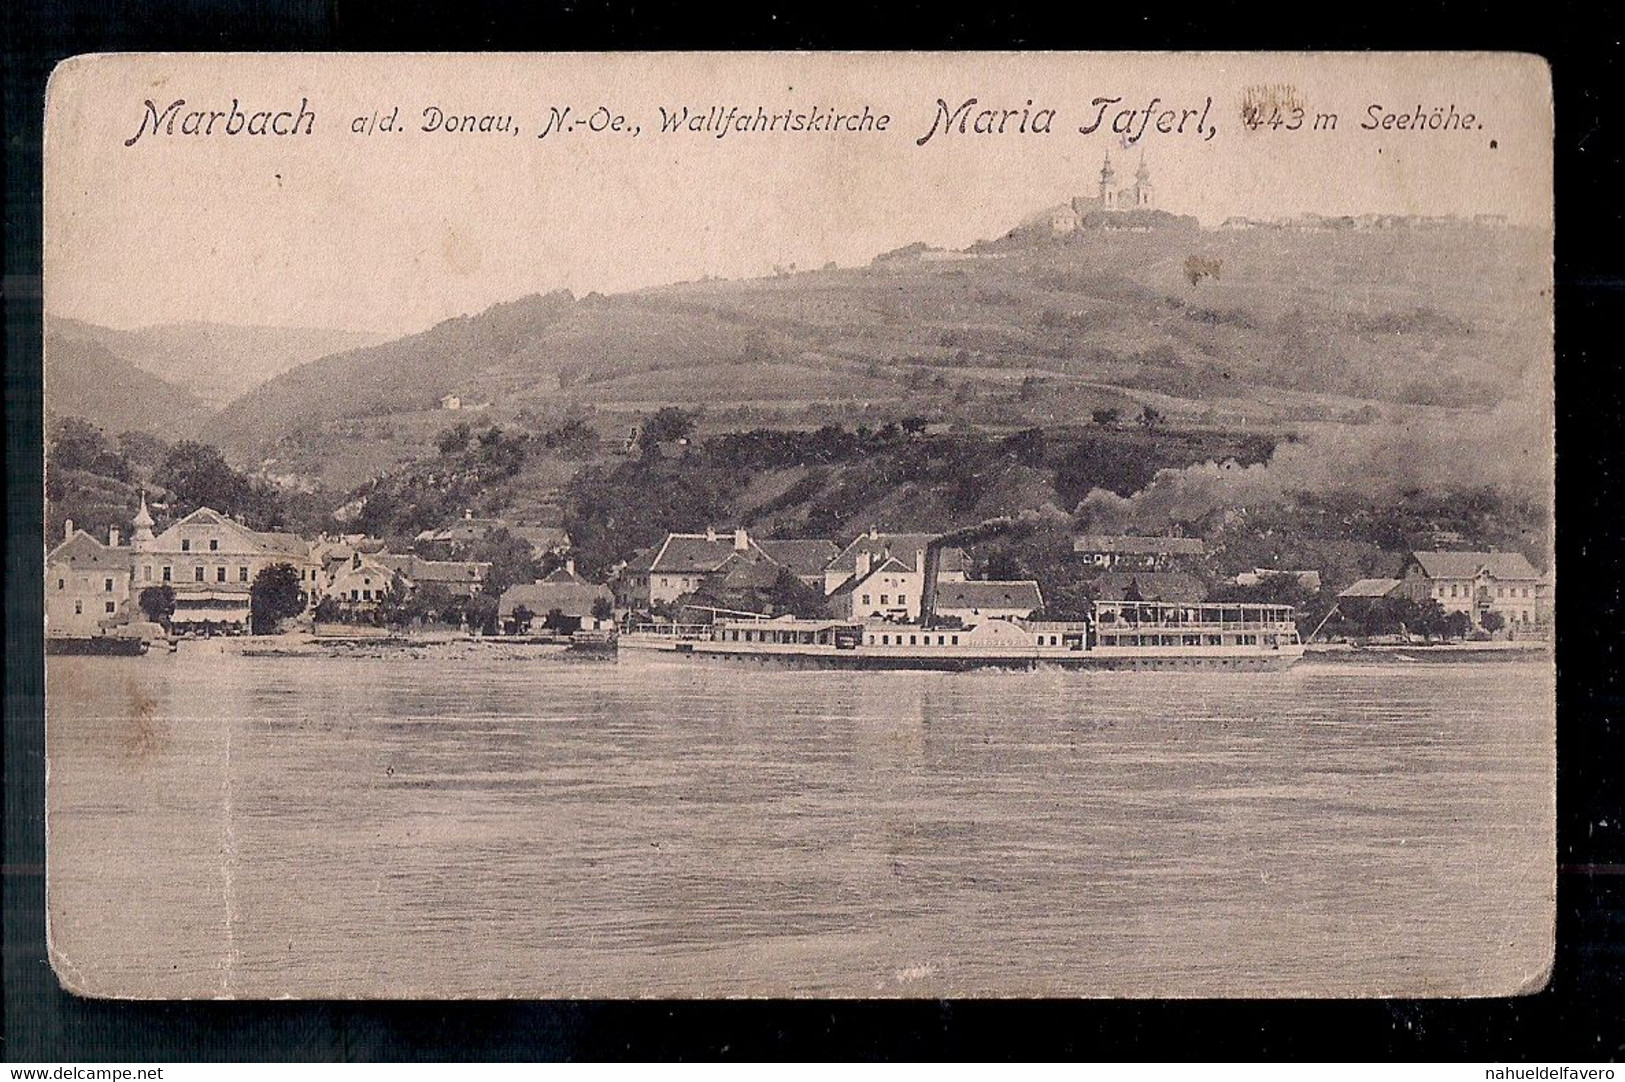 Marbach Old Donau N.Oe. Wallfahriskirche Maria Tafel - Marbach